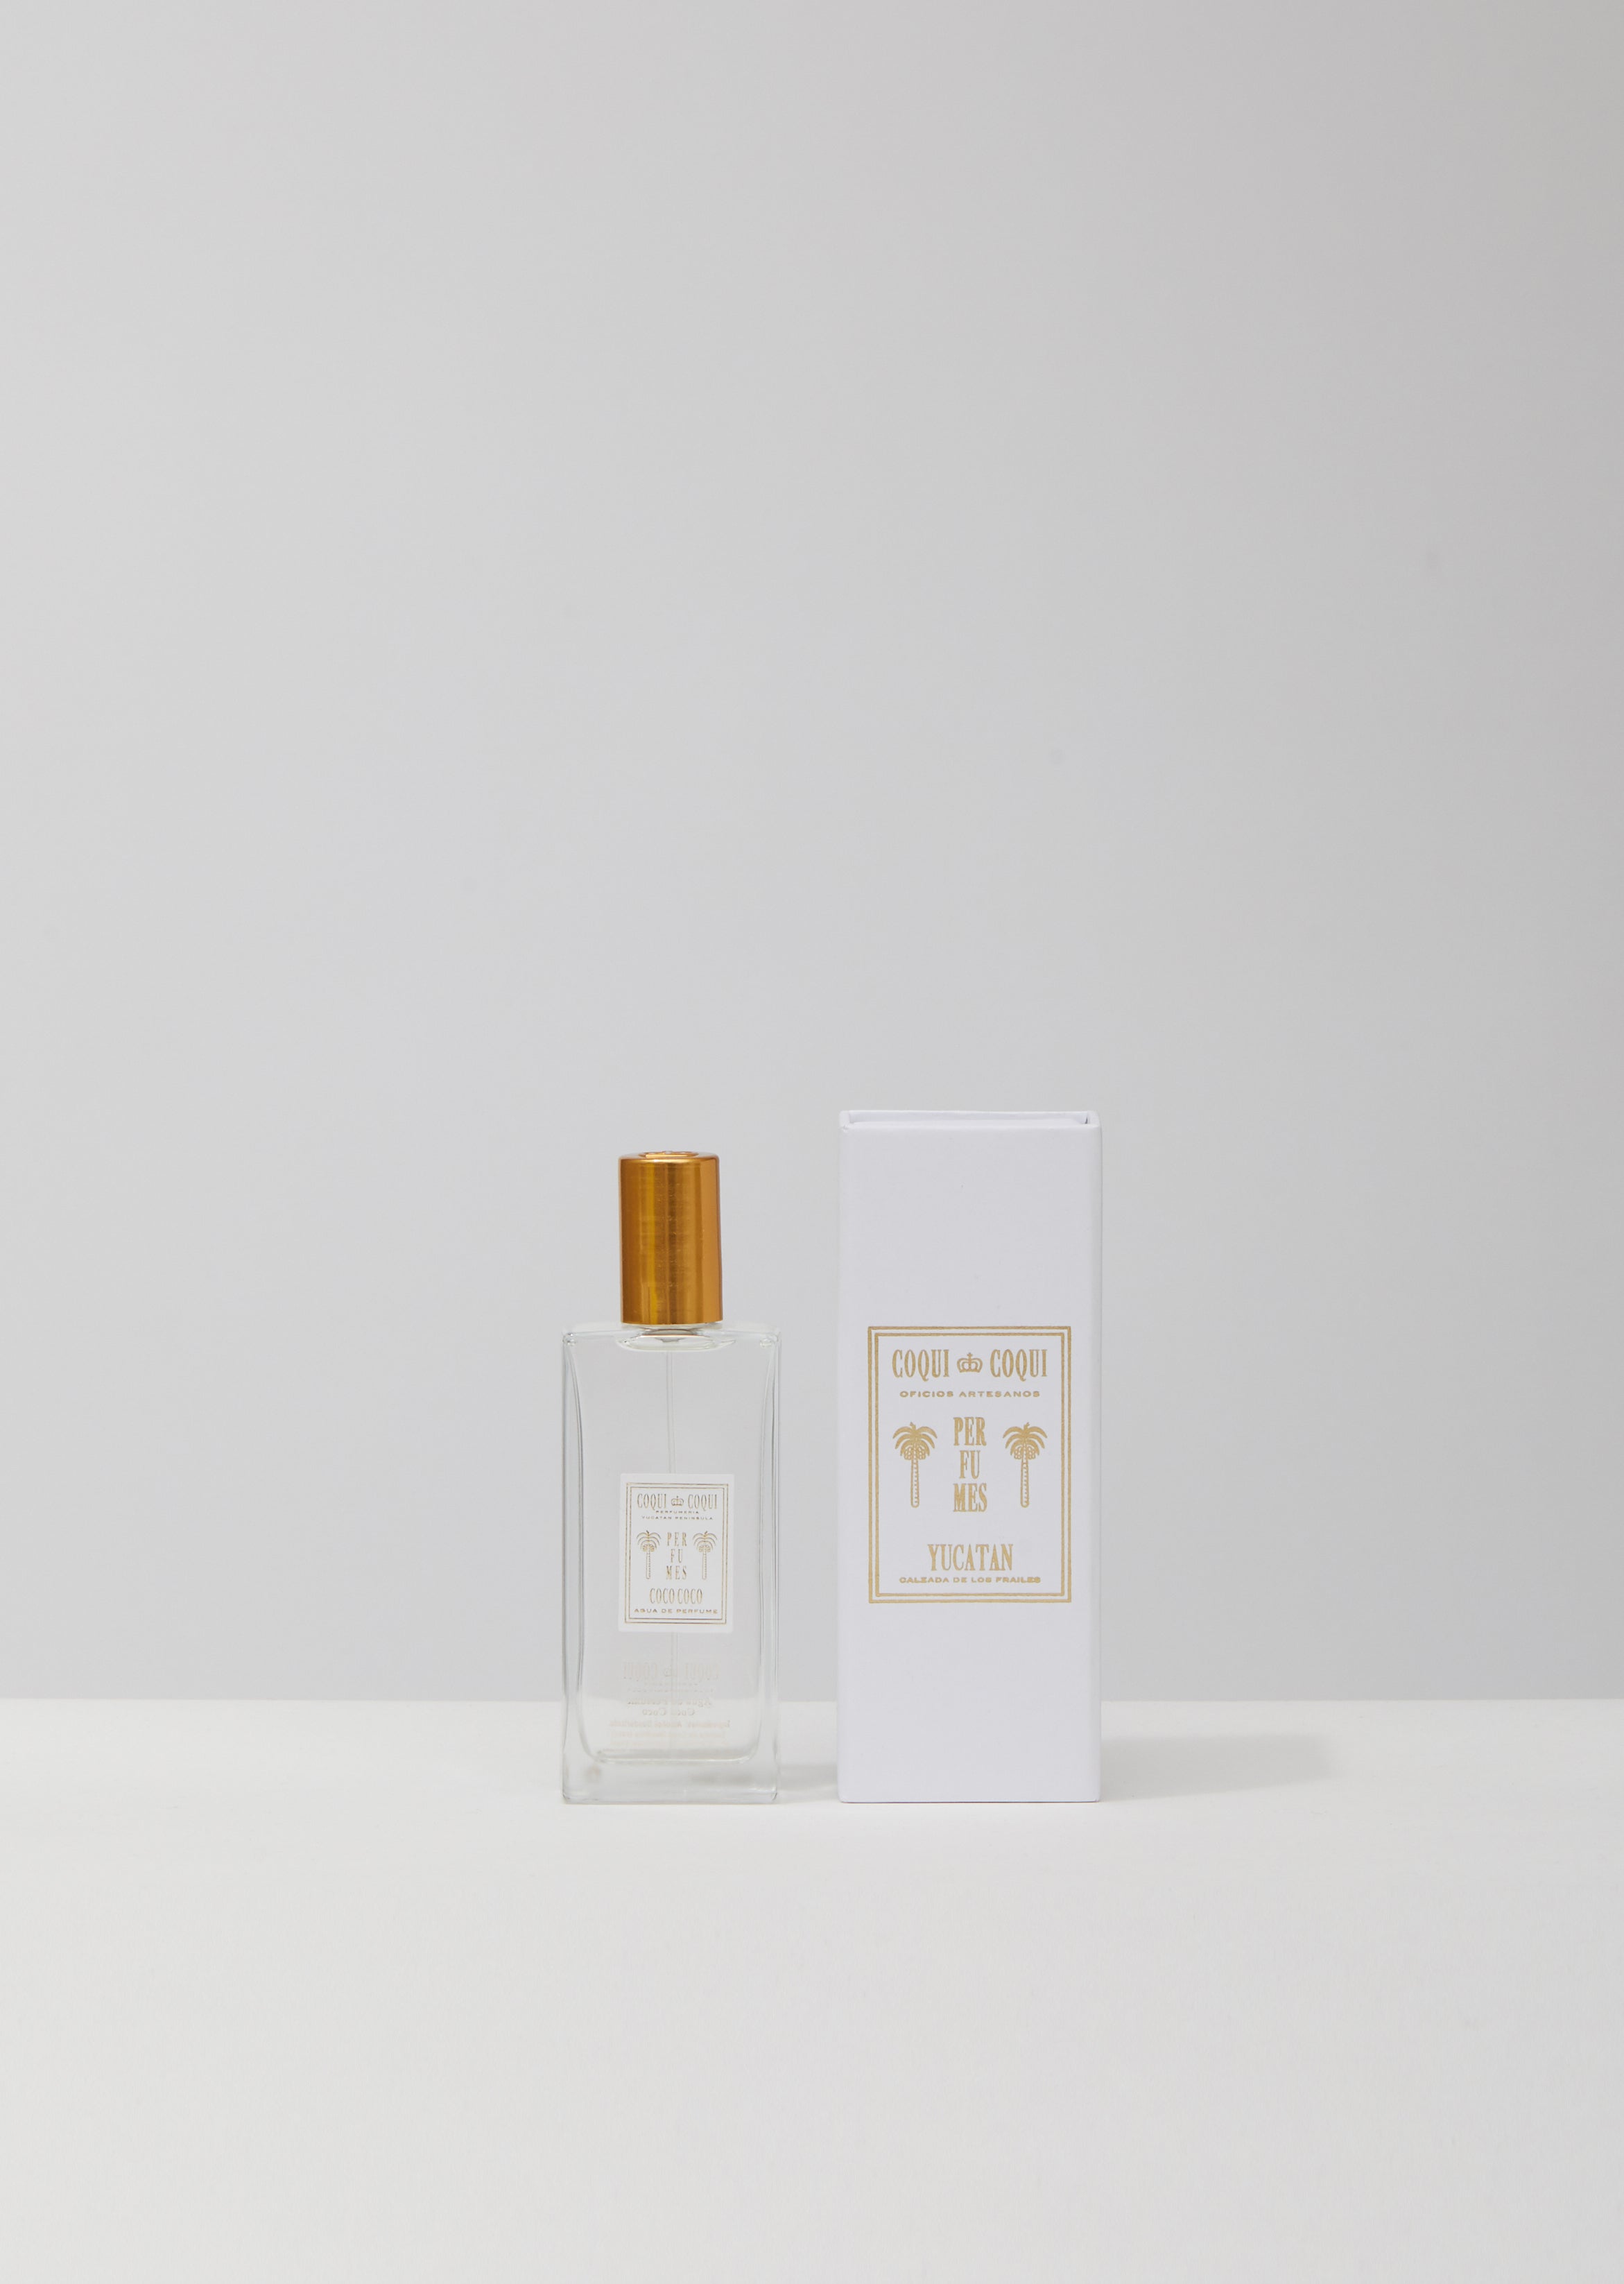 Vancopam by Coqui-Coqui » Reviews & Perfume Facts